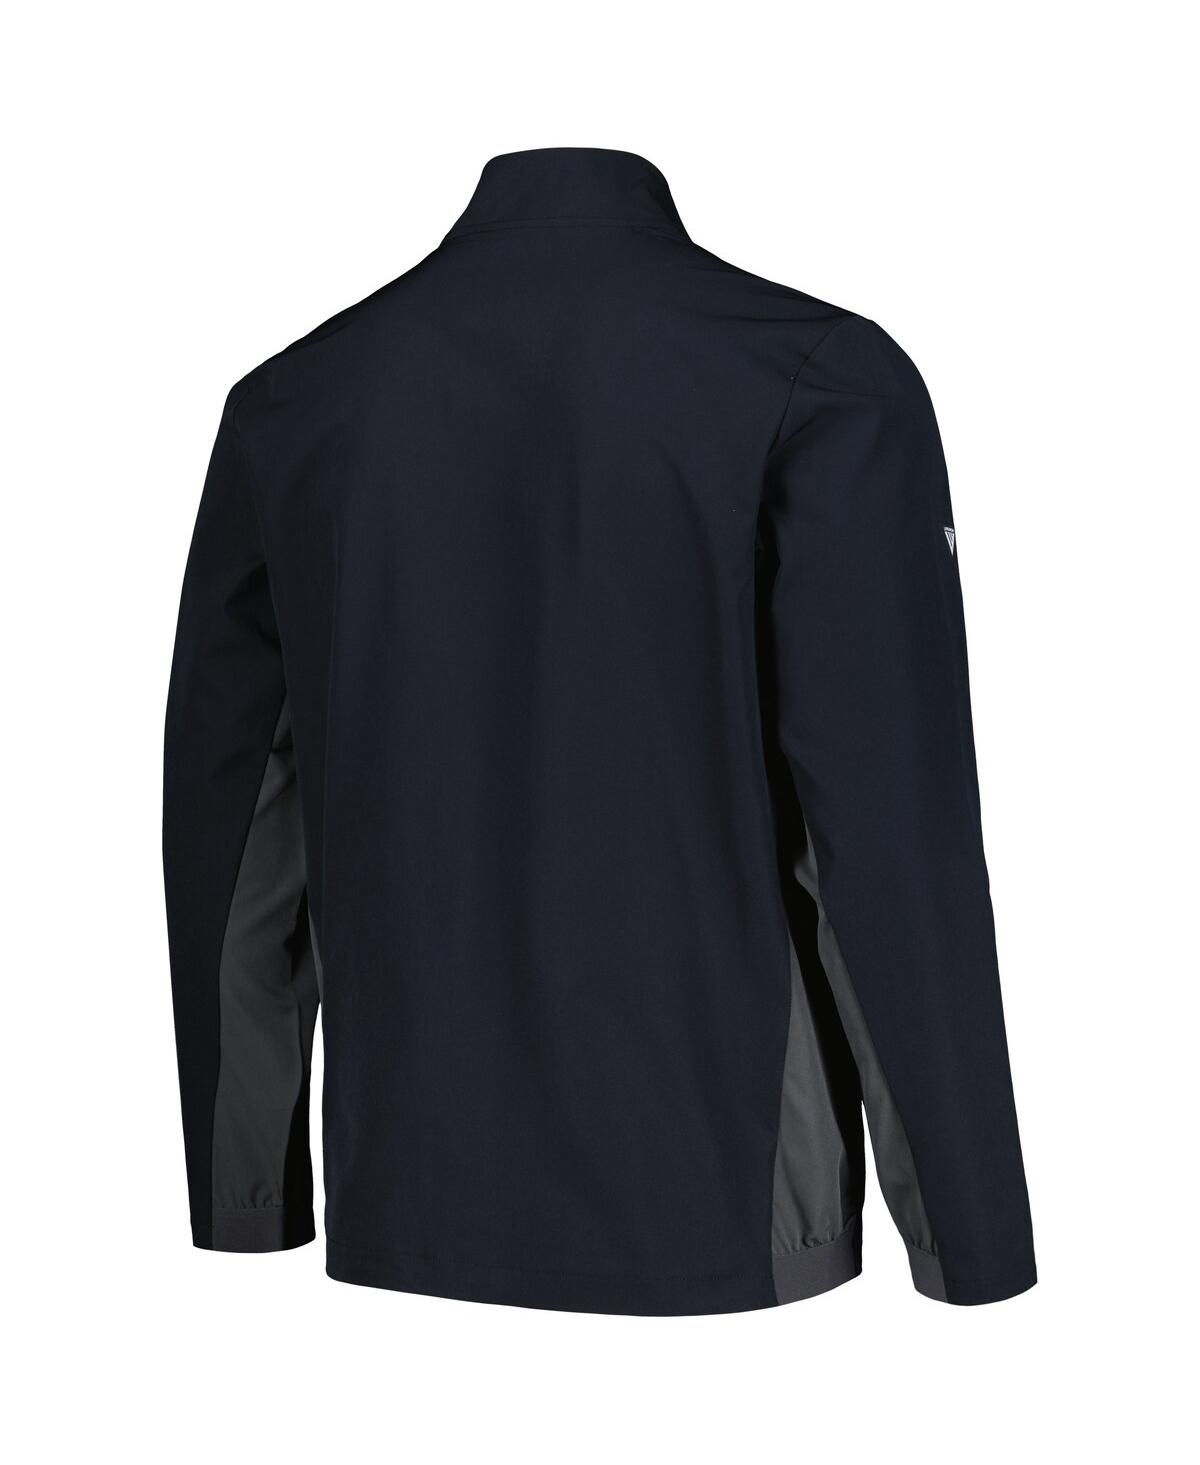 Shop Levelwear Men's  Black Golden State Warriors Harrington Full-zip Jacket